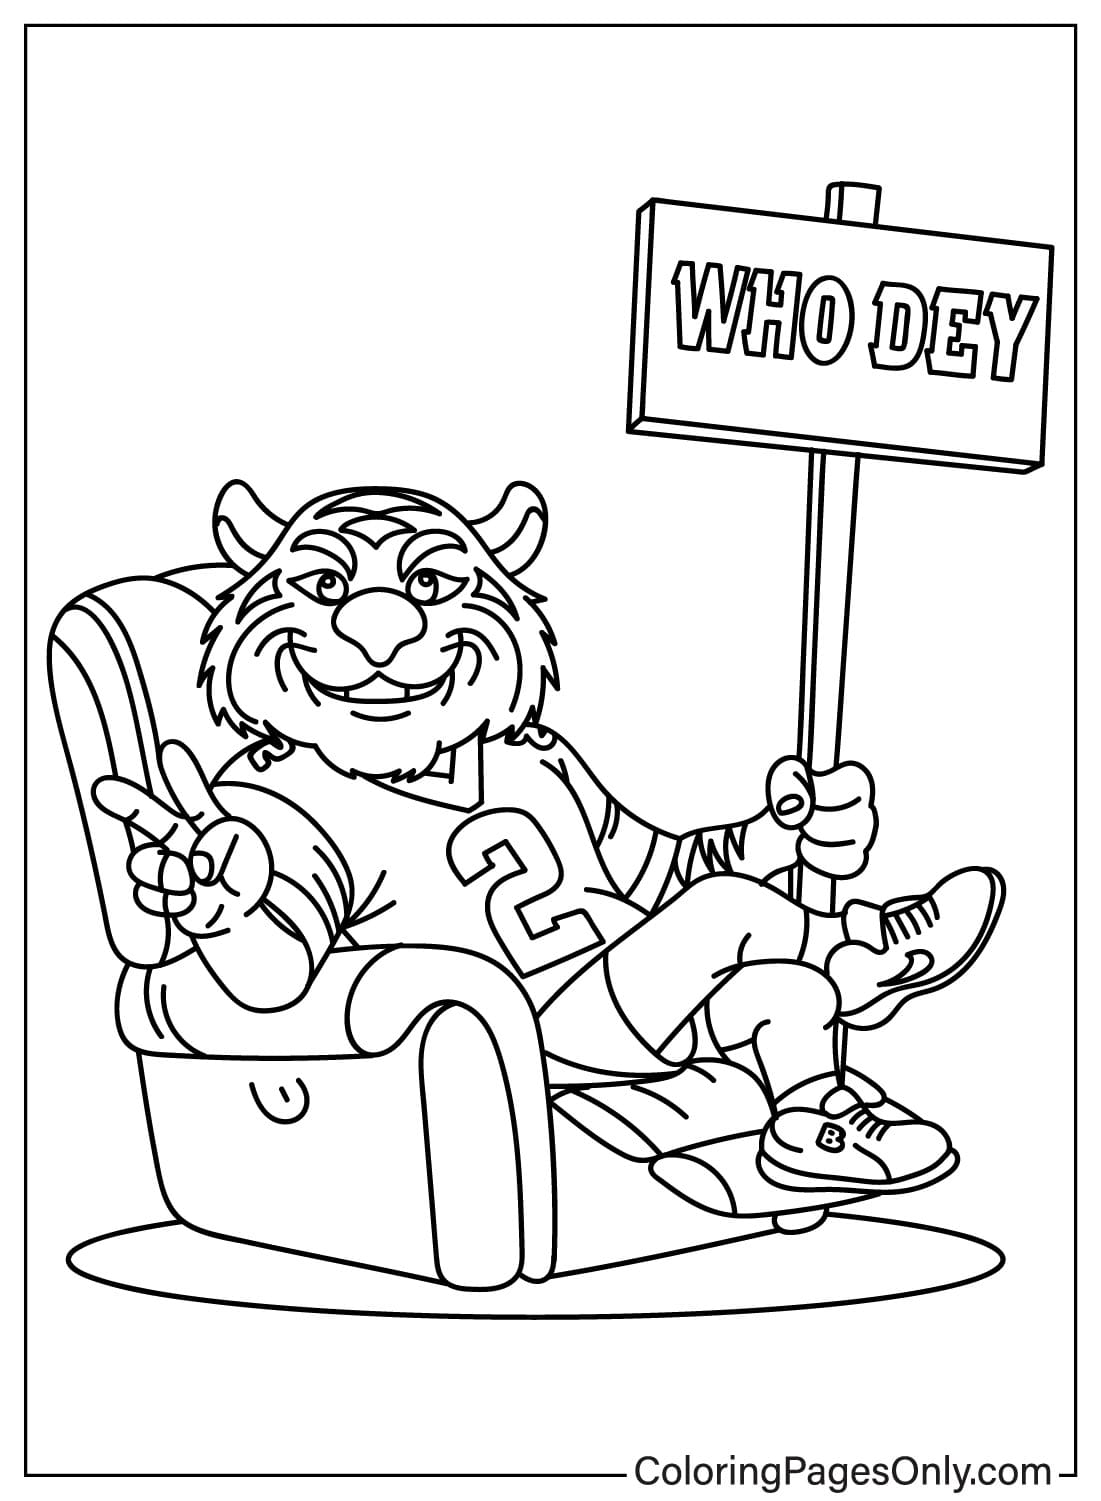 Mascot Cincinnati Bengals Coloring Page Free from Cincinnati Bengals